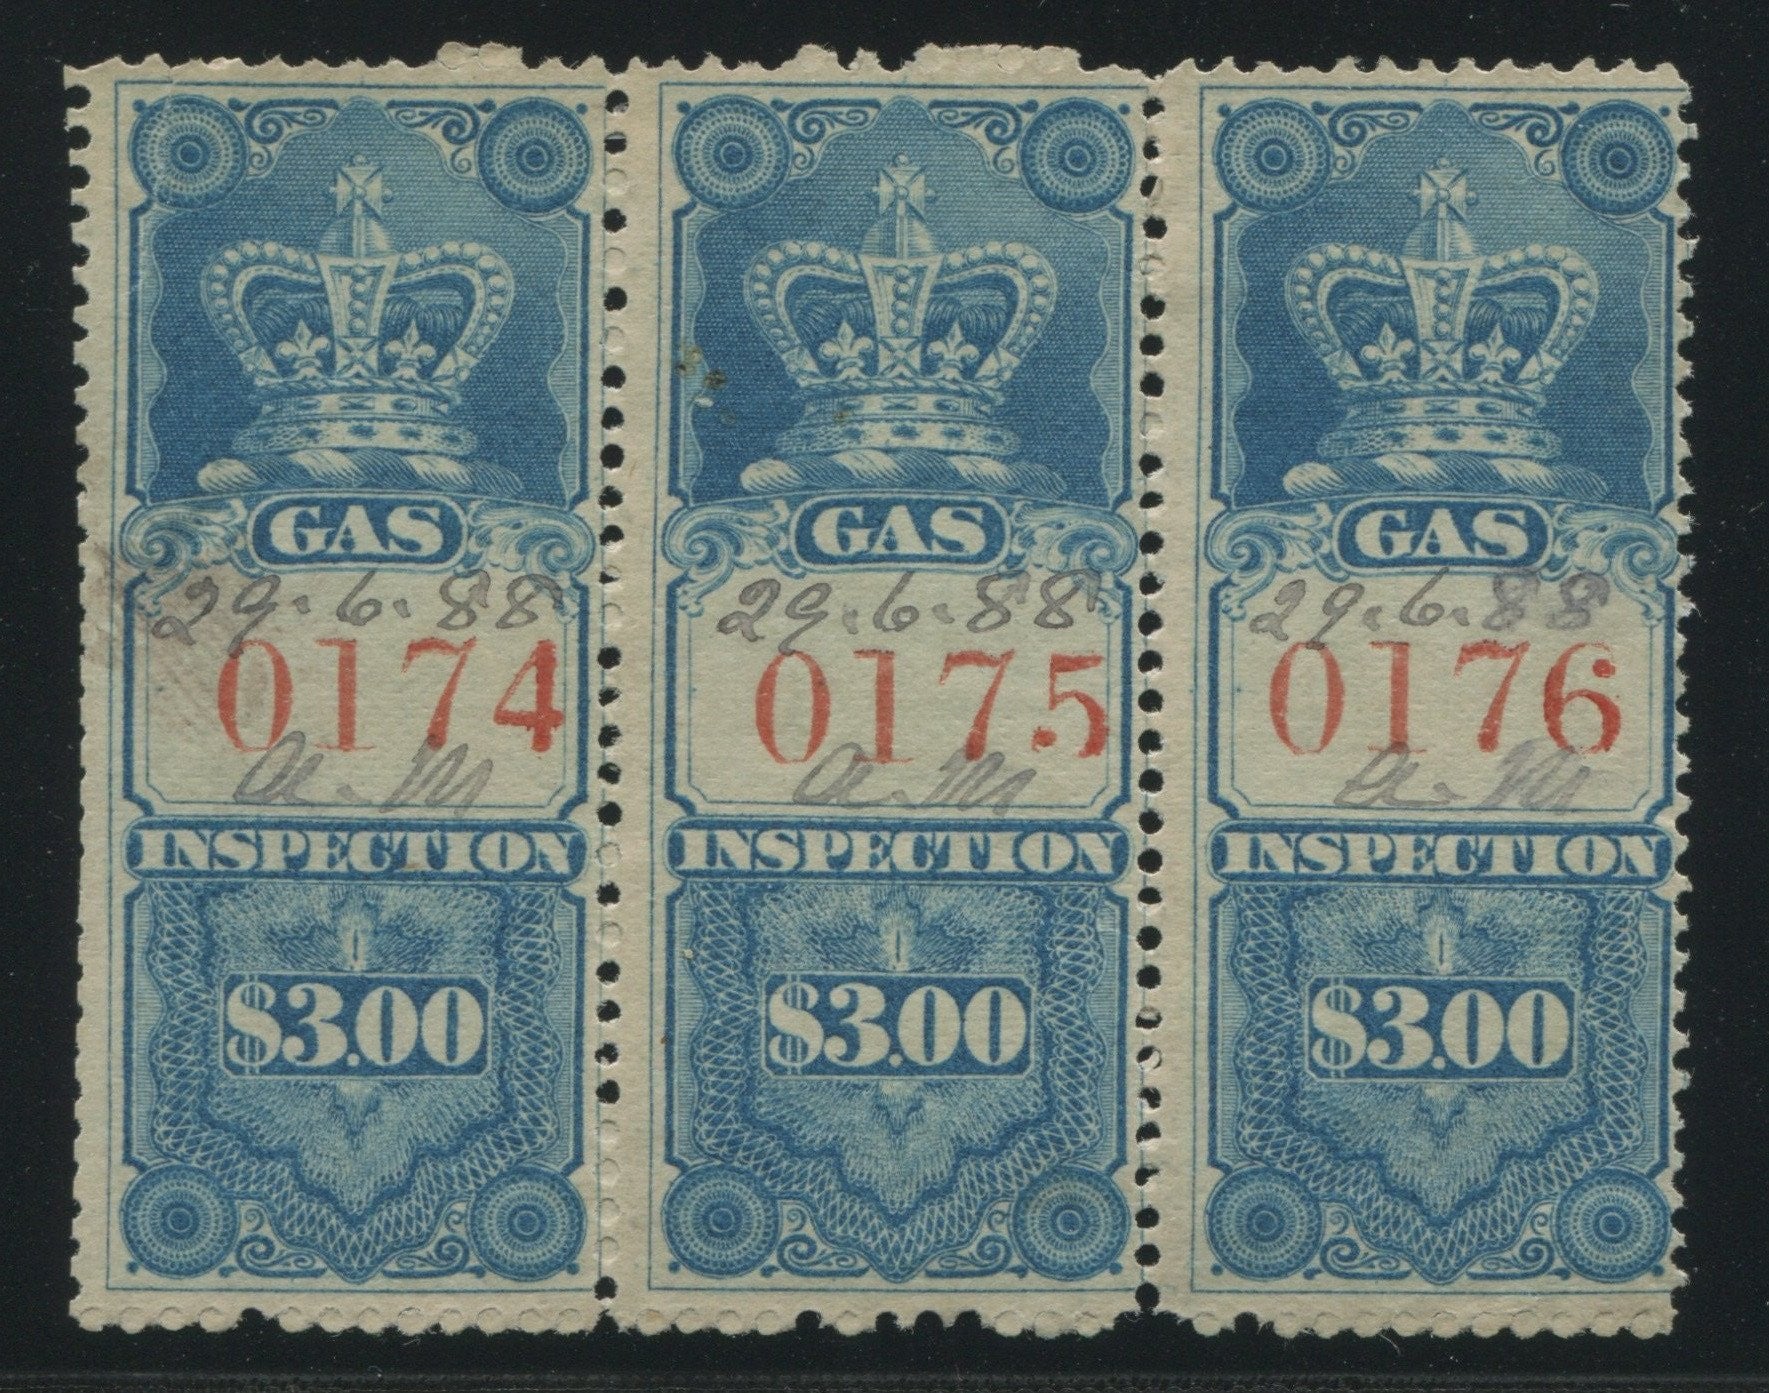 0006FG1708 - FG3 - Used Strip of 3 - Deveney Stamps Ltd. Canadian Stamps